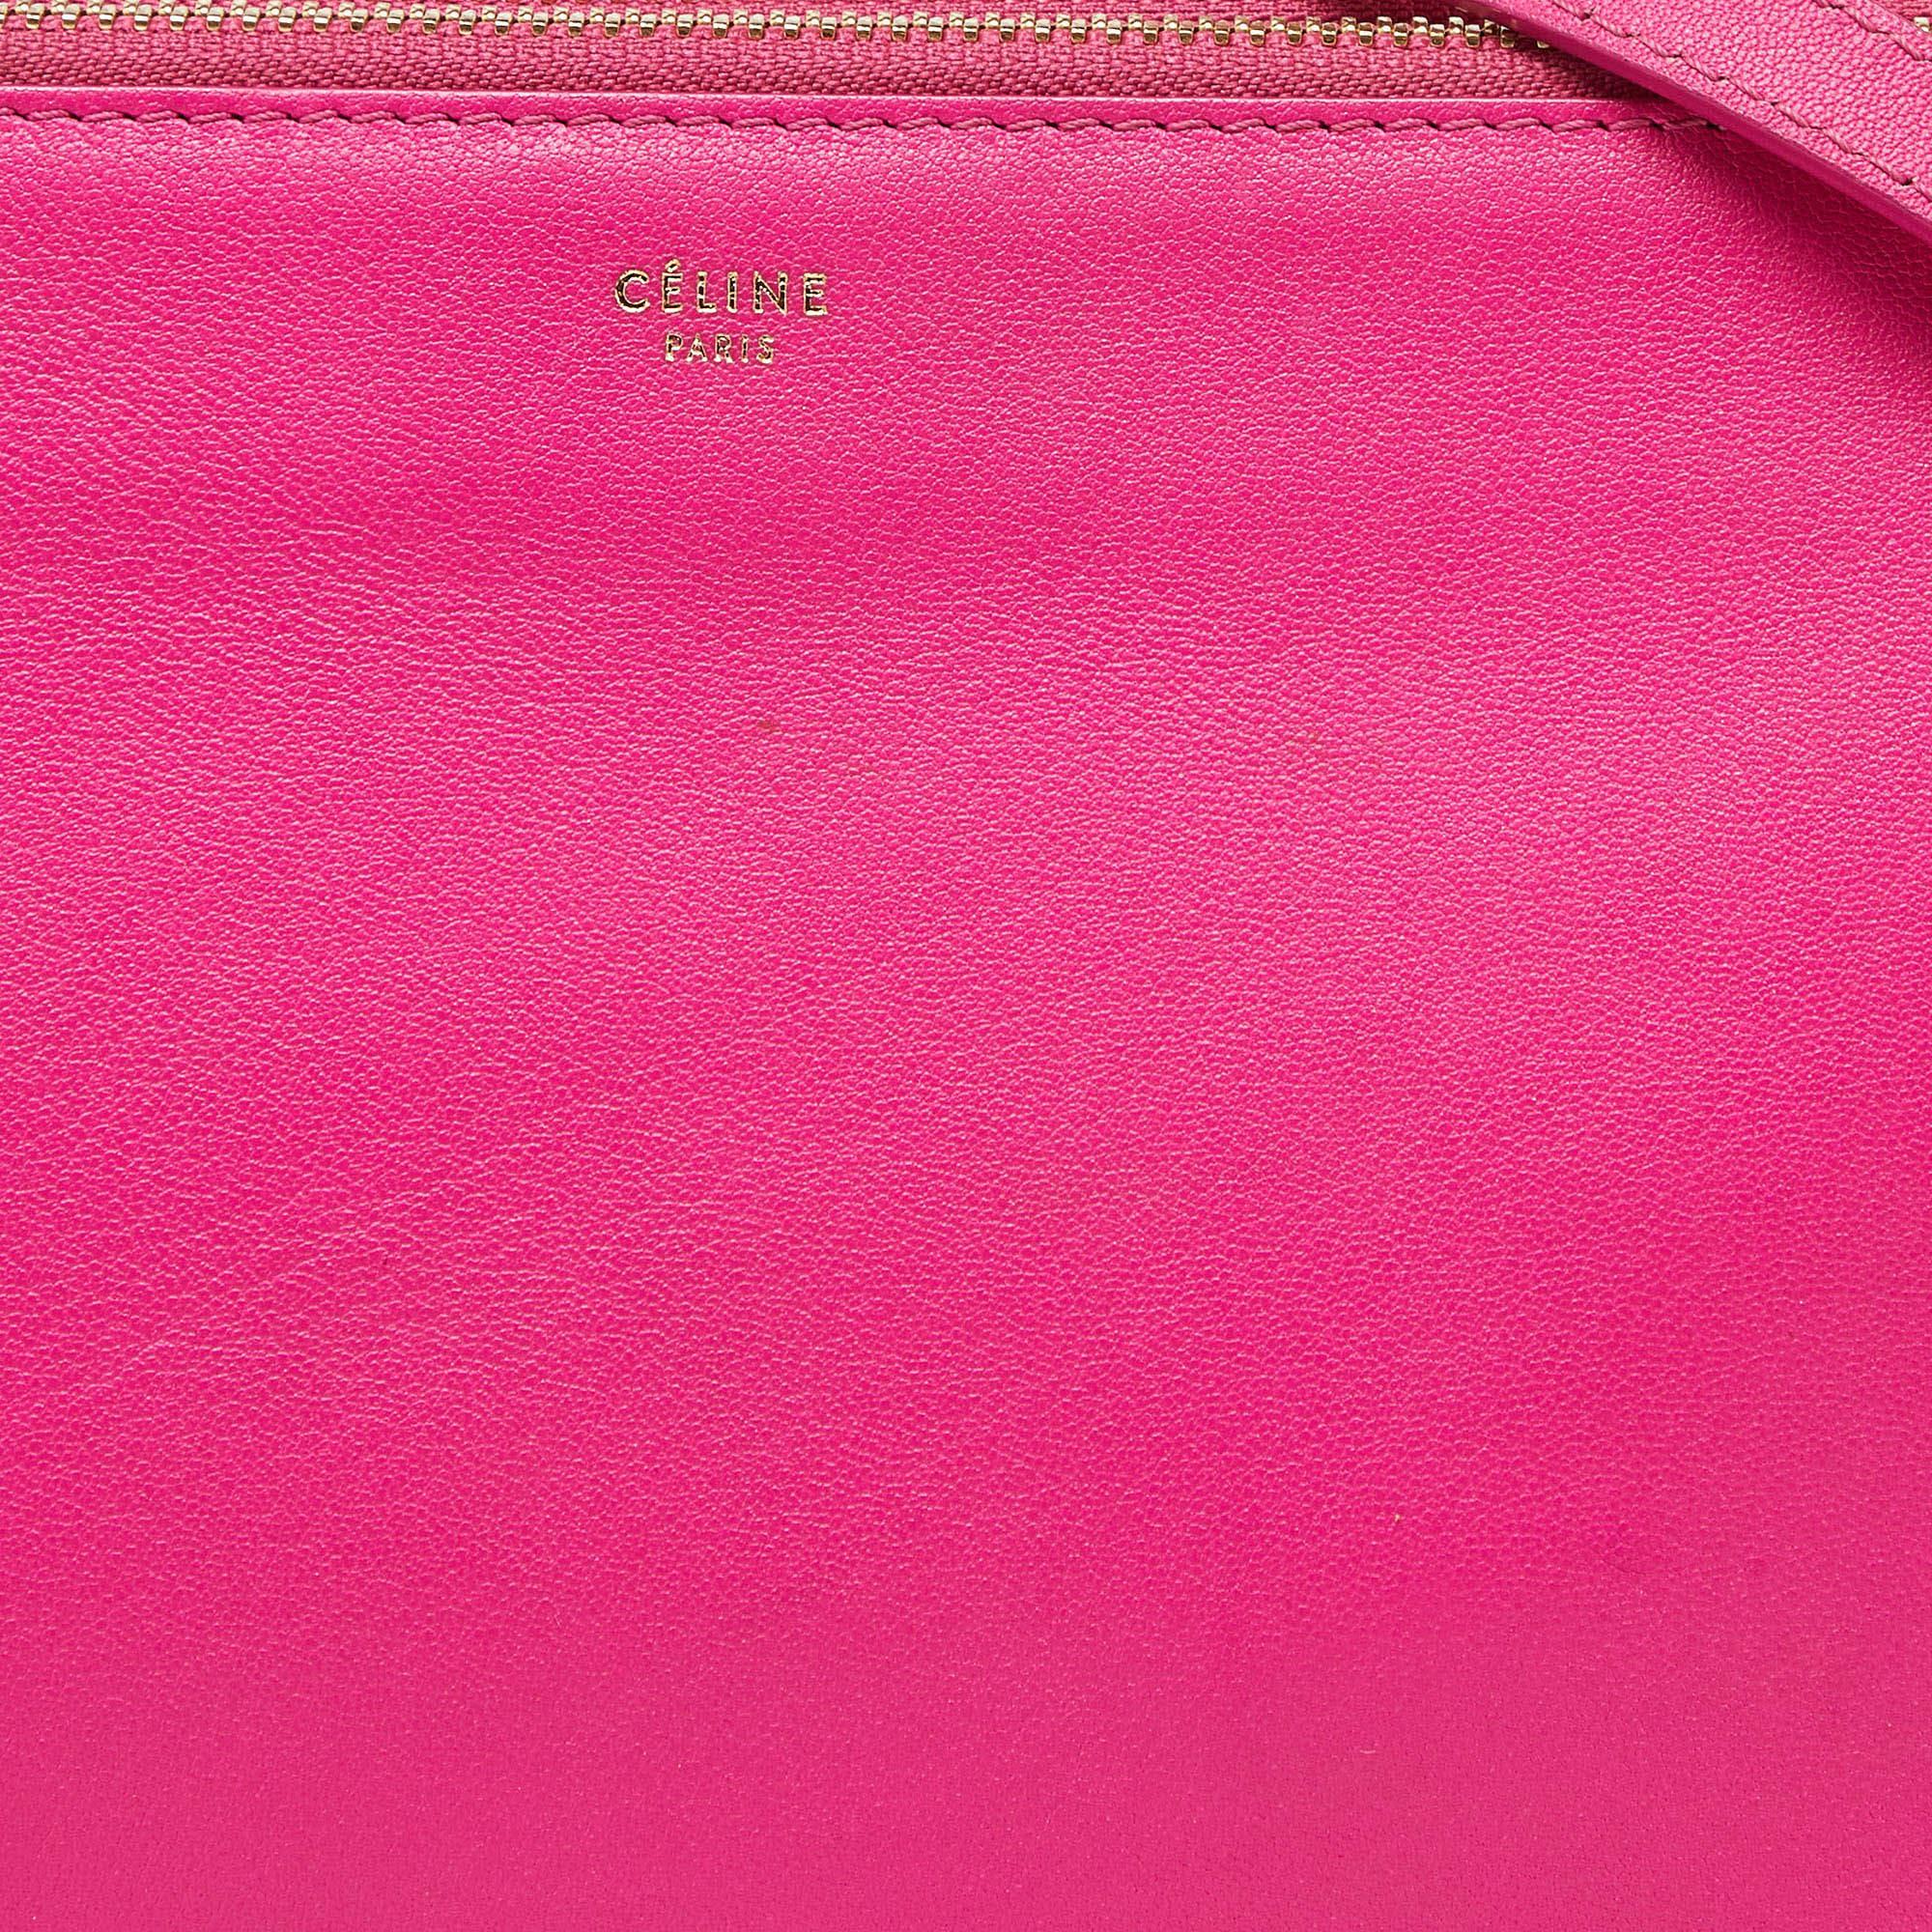 Celine Pink Leather Large Trio Zip Crossbody Bag For Sale 1